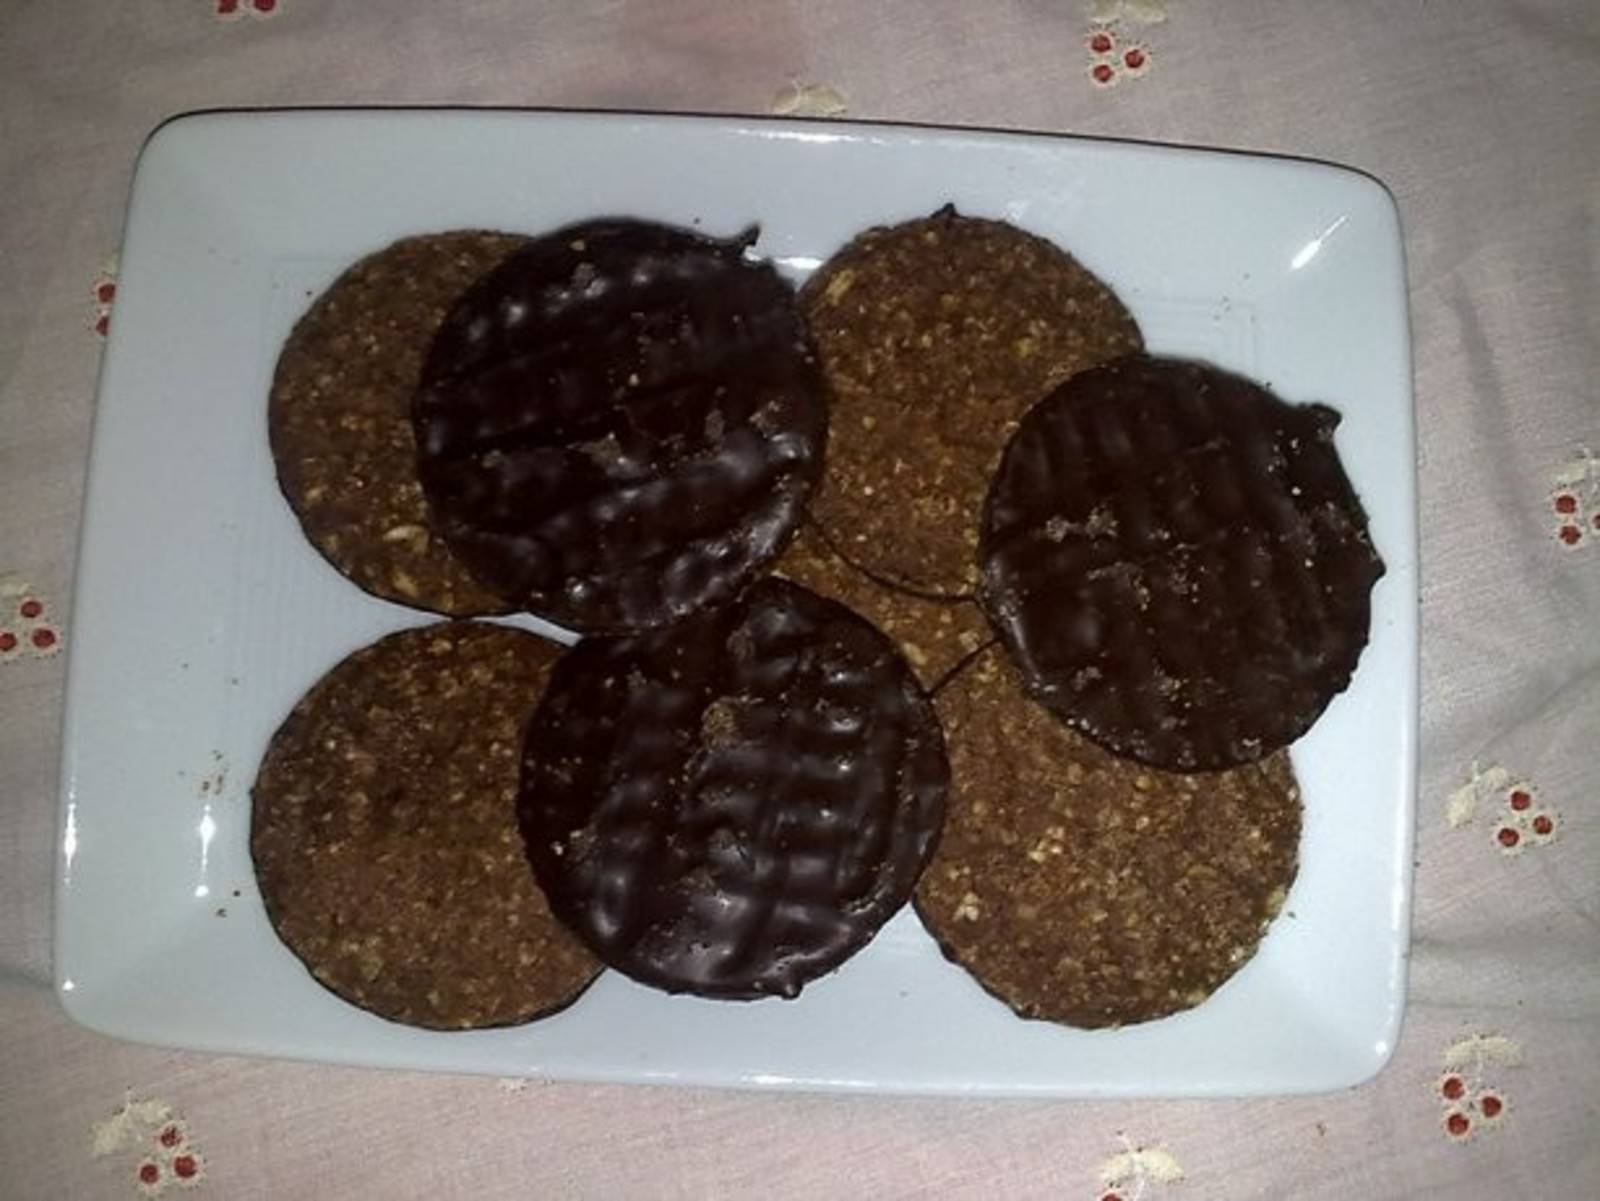 Hafercookies mit Schokolade